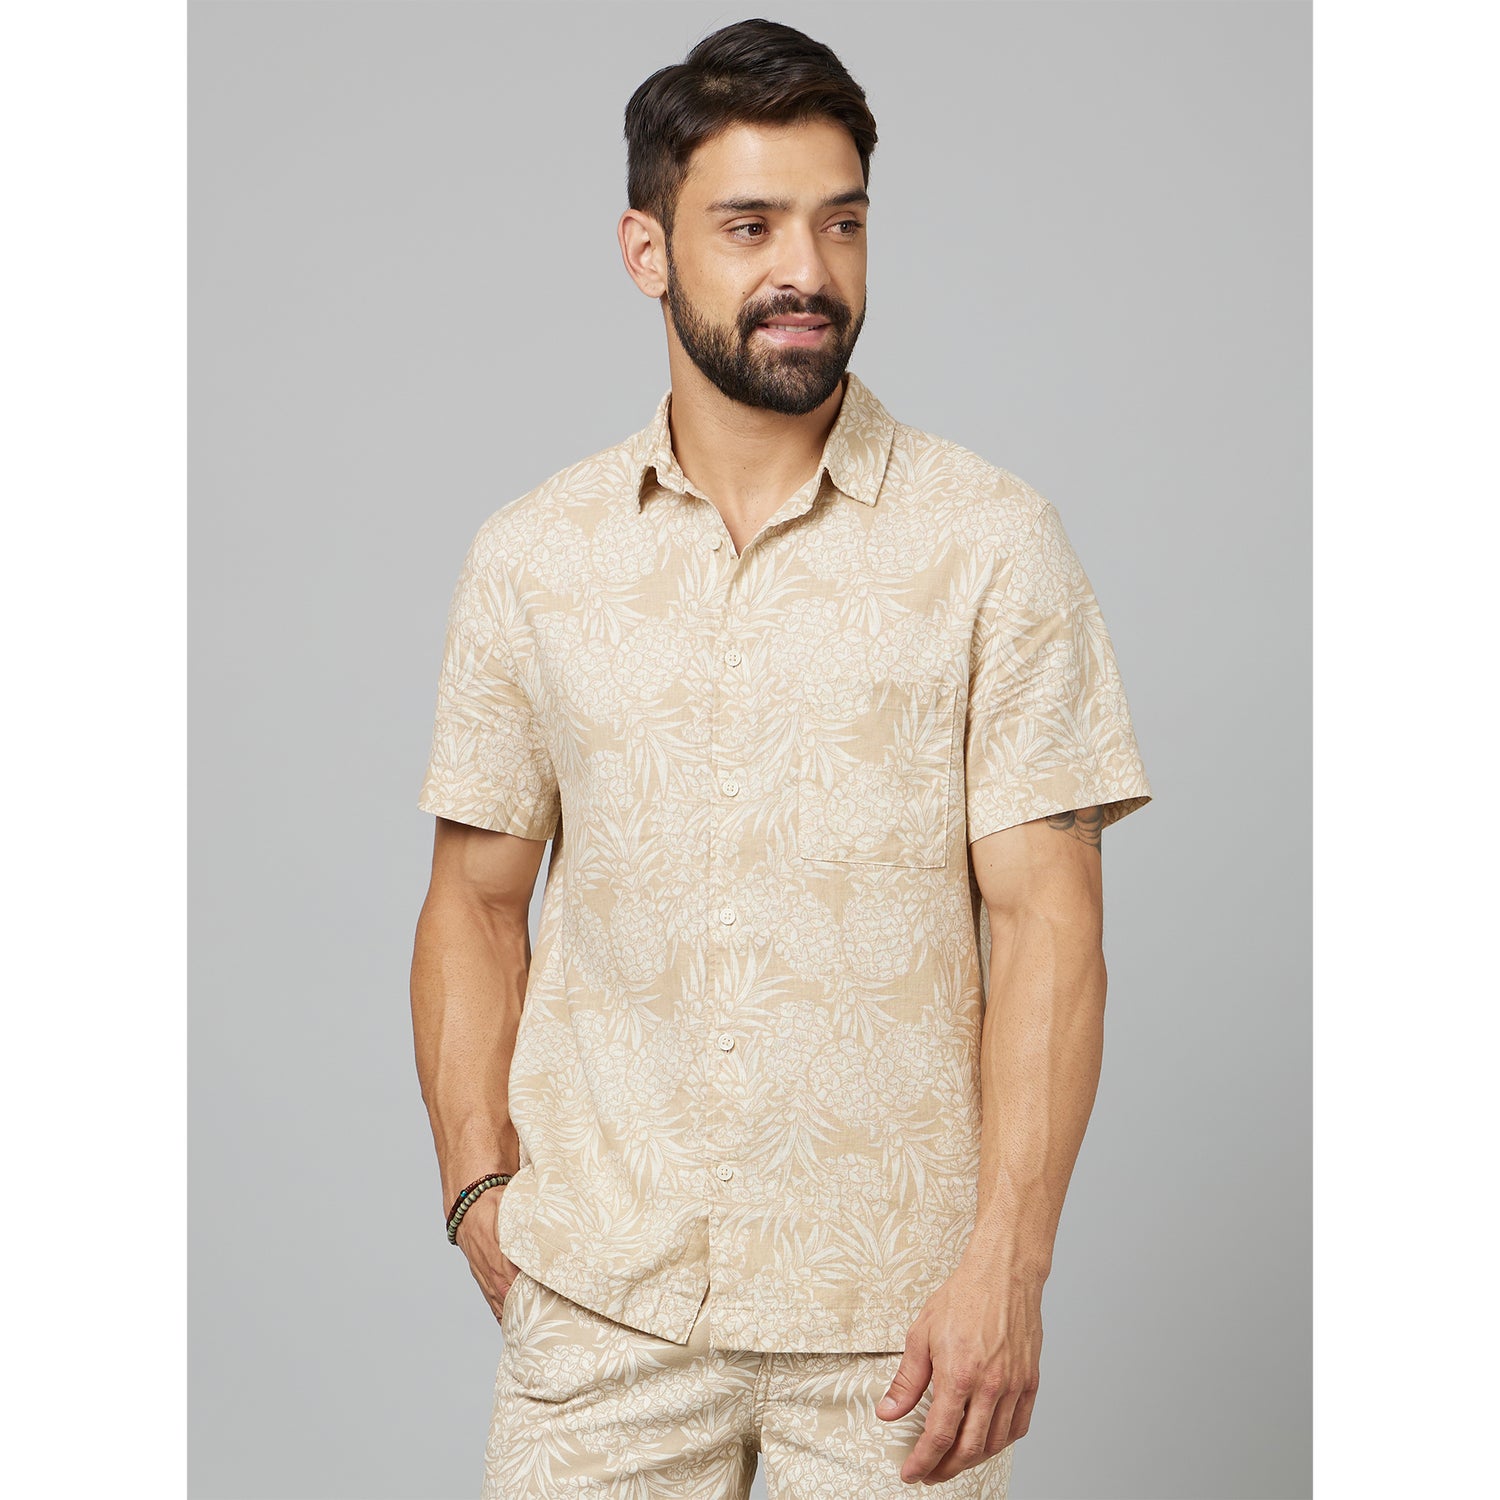 Beige Classic Tropical Printed Spread Collar Casual Cotton Shirt (DAOVERA)